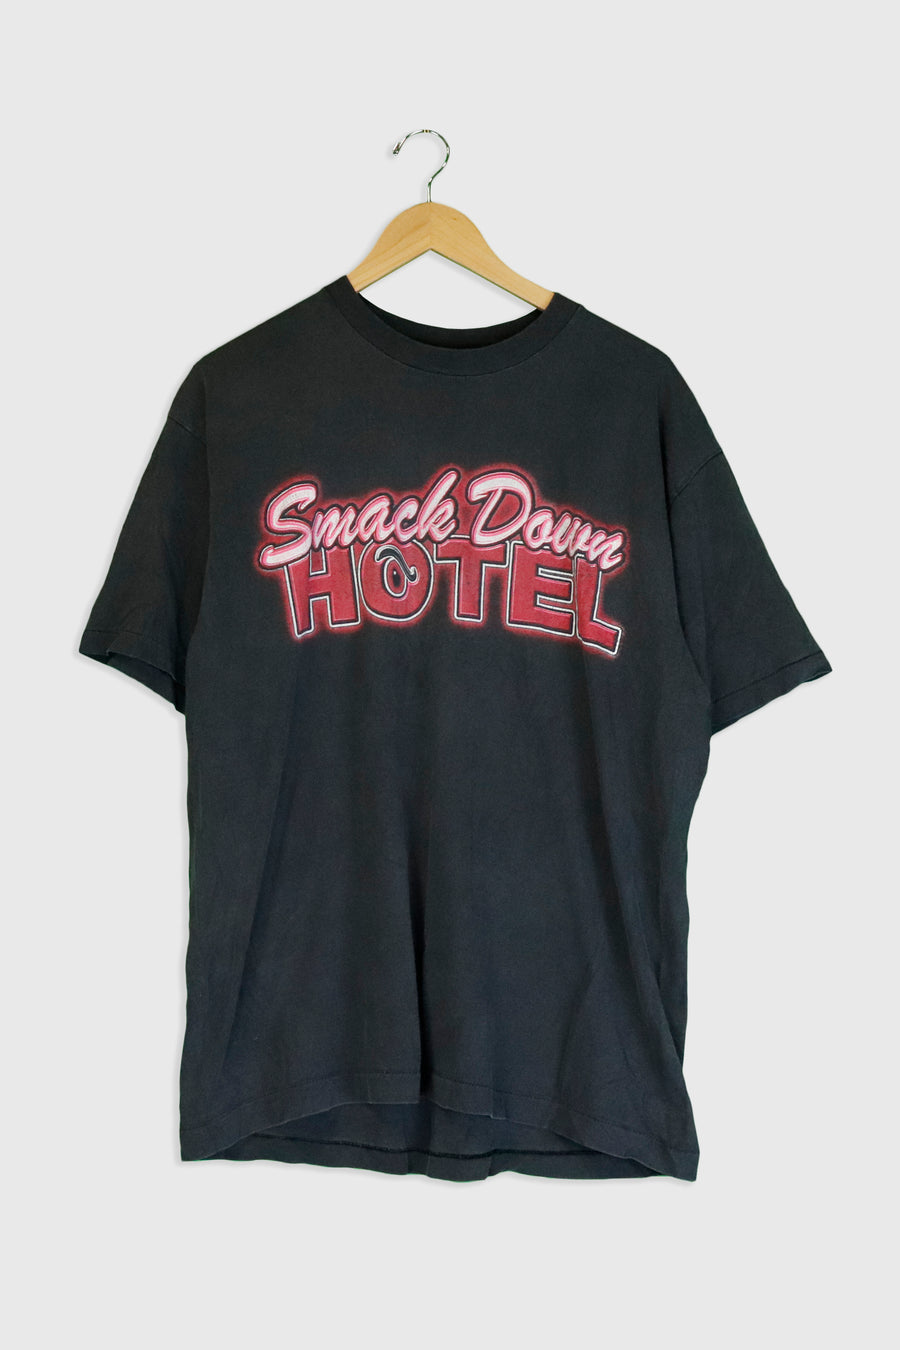 Vintage WWF Smack Down Hotel The Rock T Shirt Sz XL